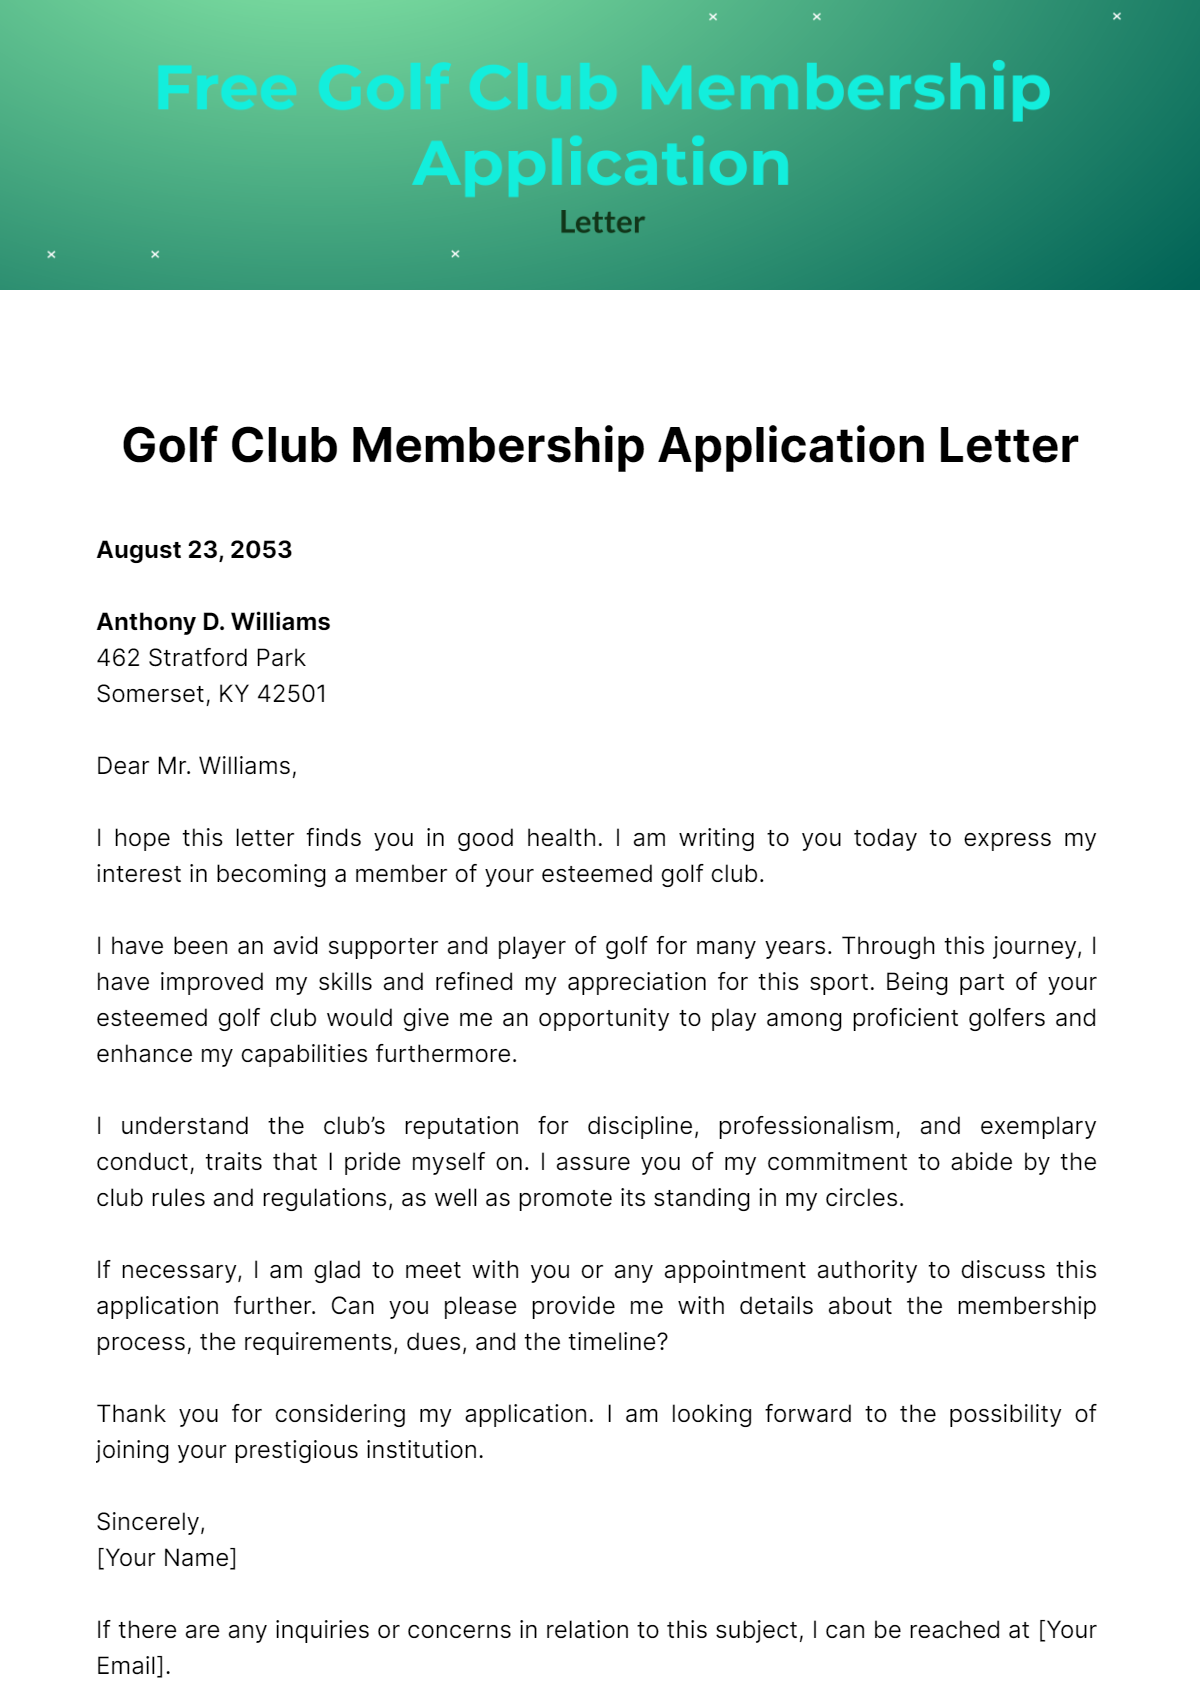 Free Golf Club Membership Application Letter Template